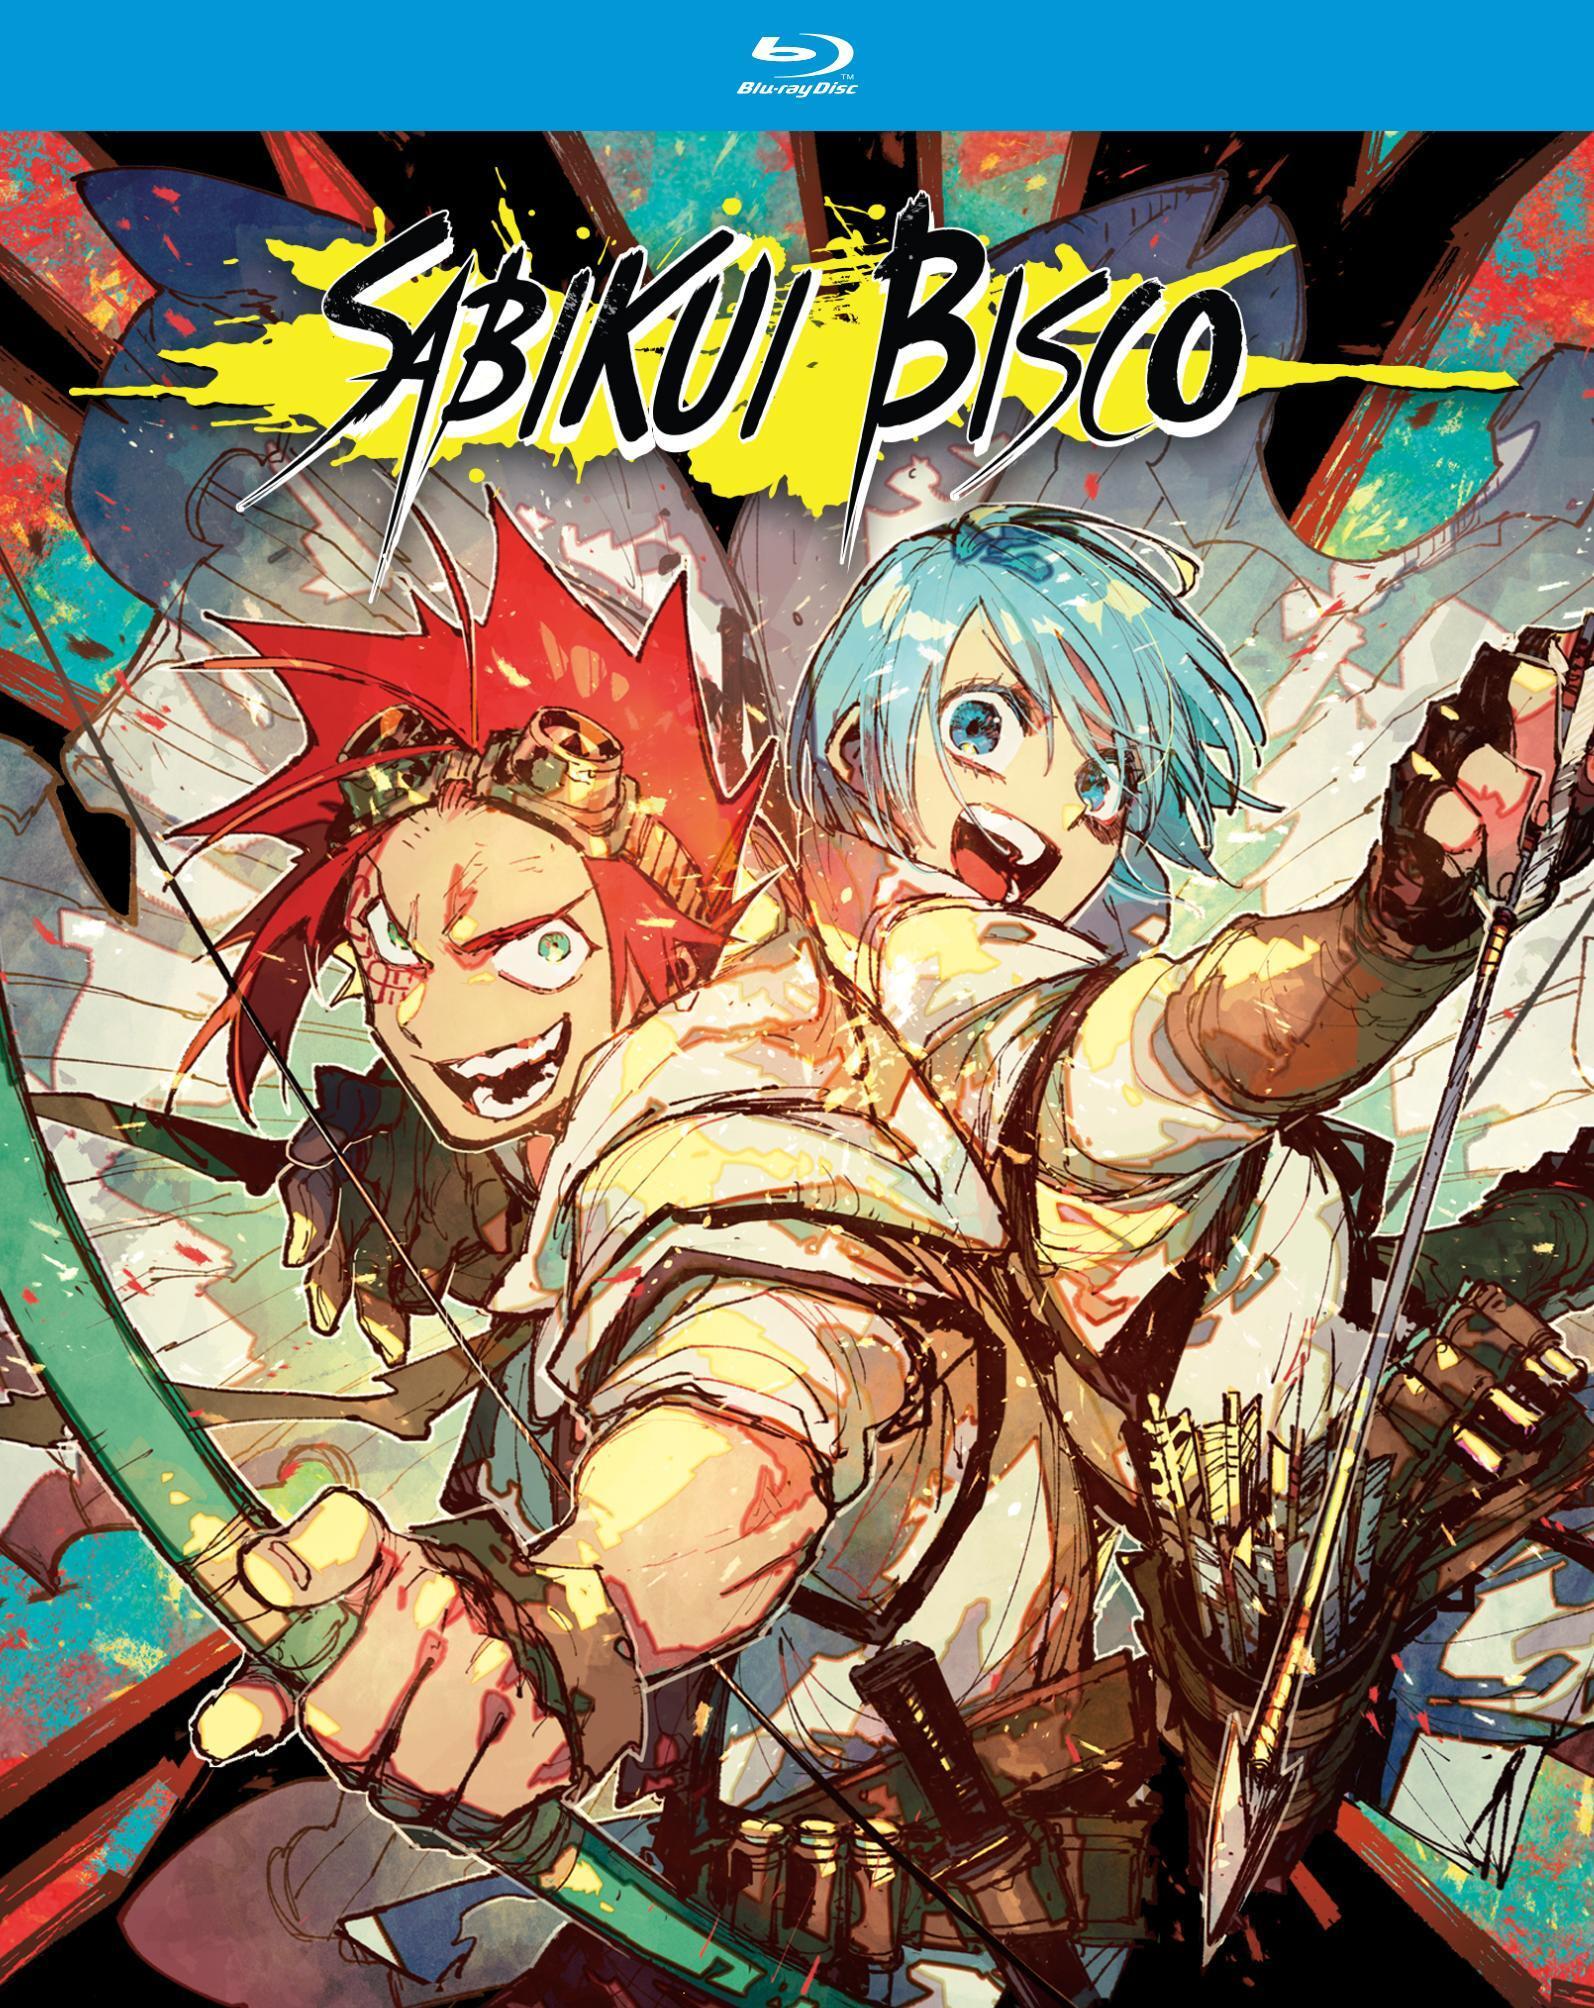 Sabikui Bisco” TV Anime Receives a Second Season